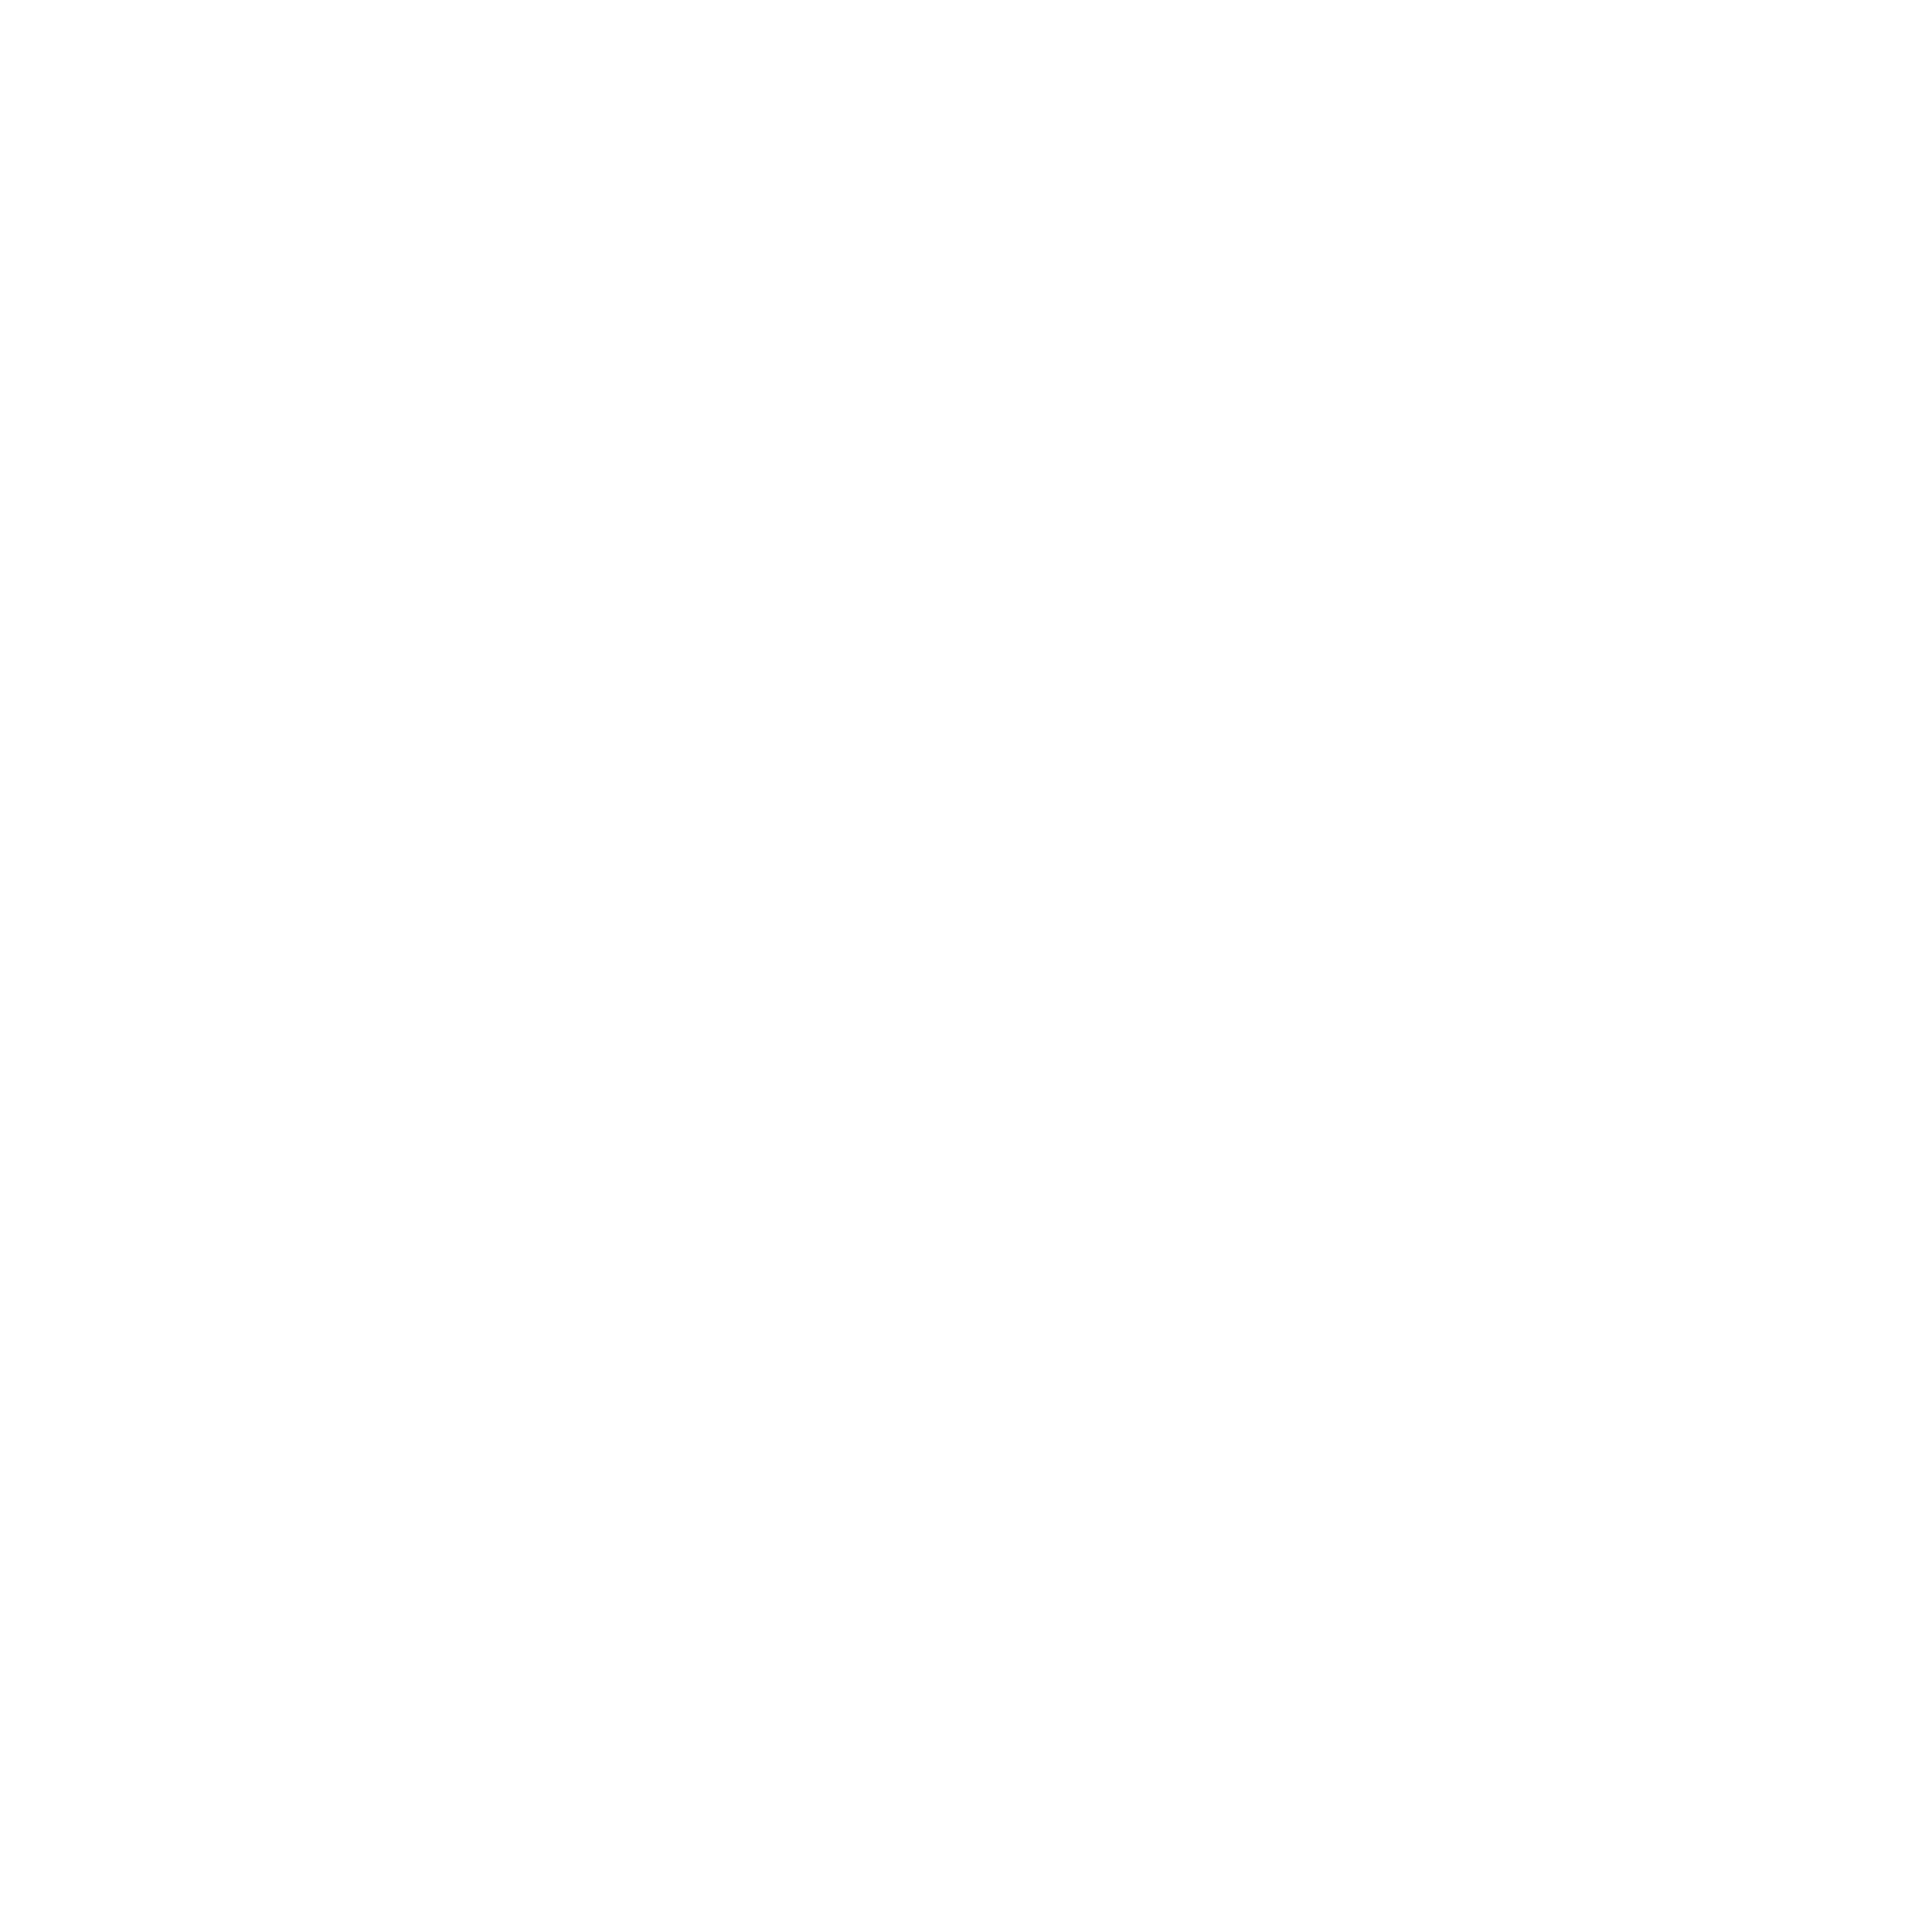 Kose Logo - Kose Logo PNG Transparent & SVG Vector - Freebie Supply